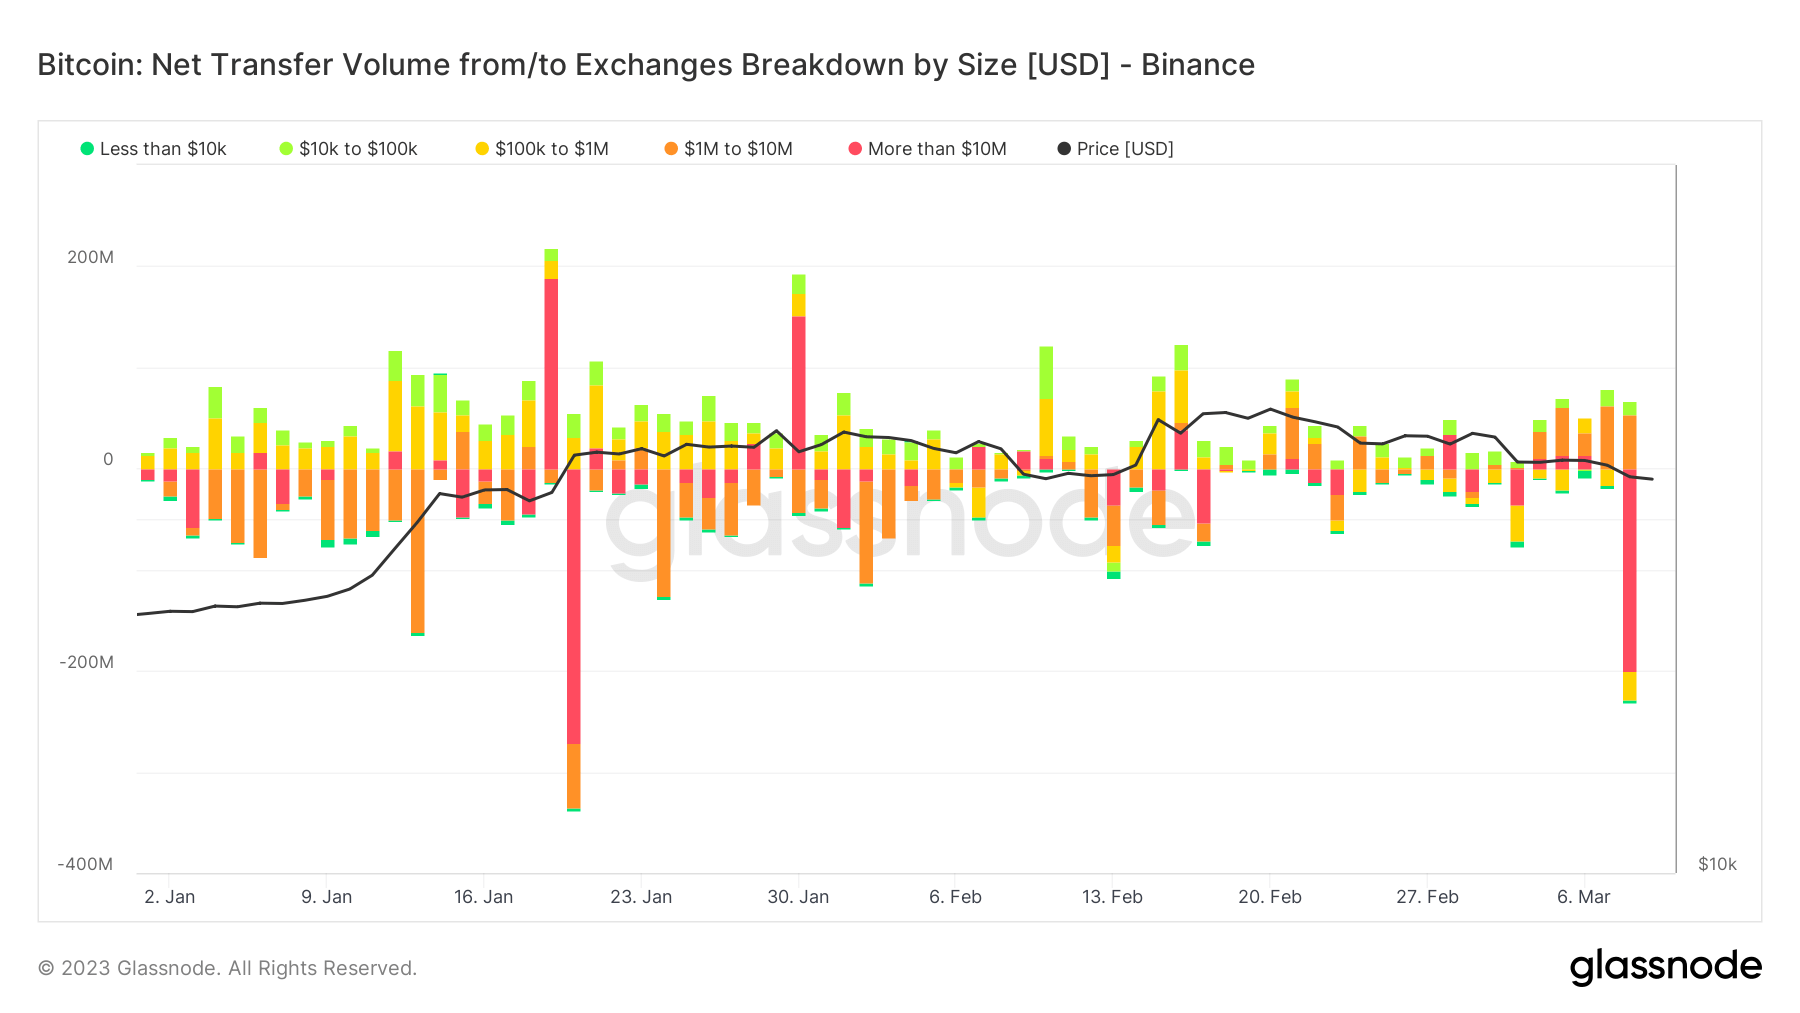 Exchange Netflow Binance: (Source: Glassnode)